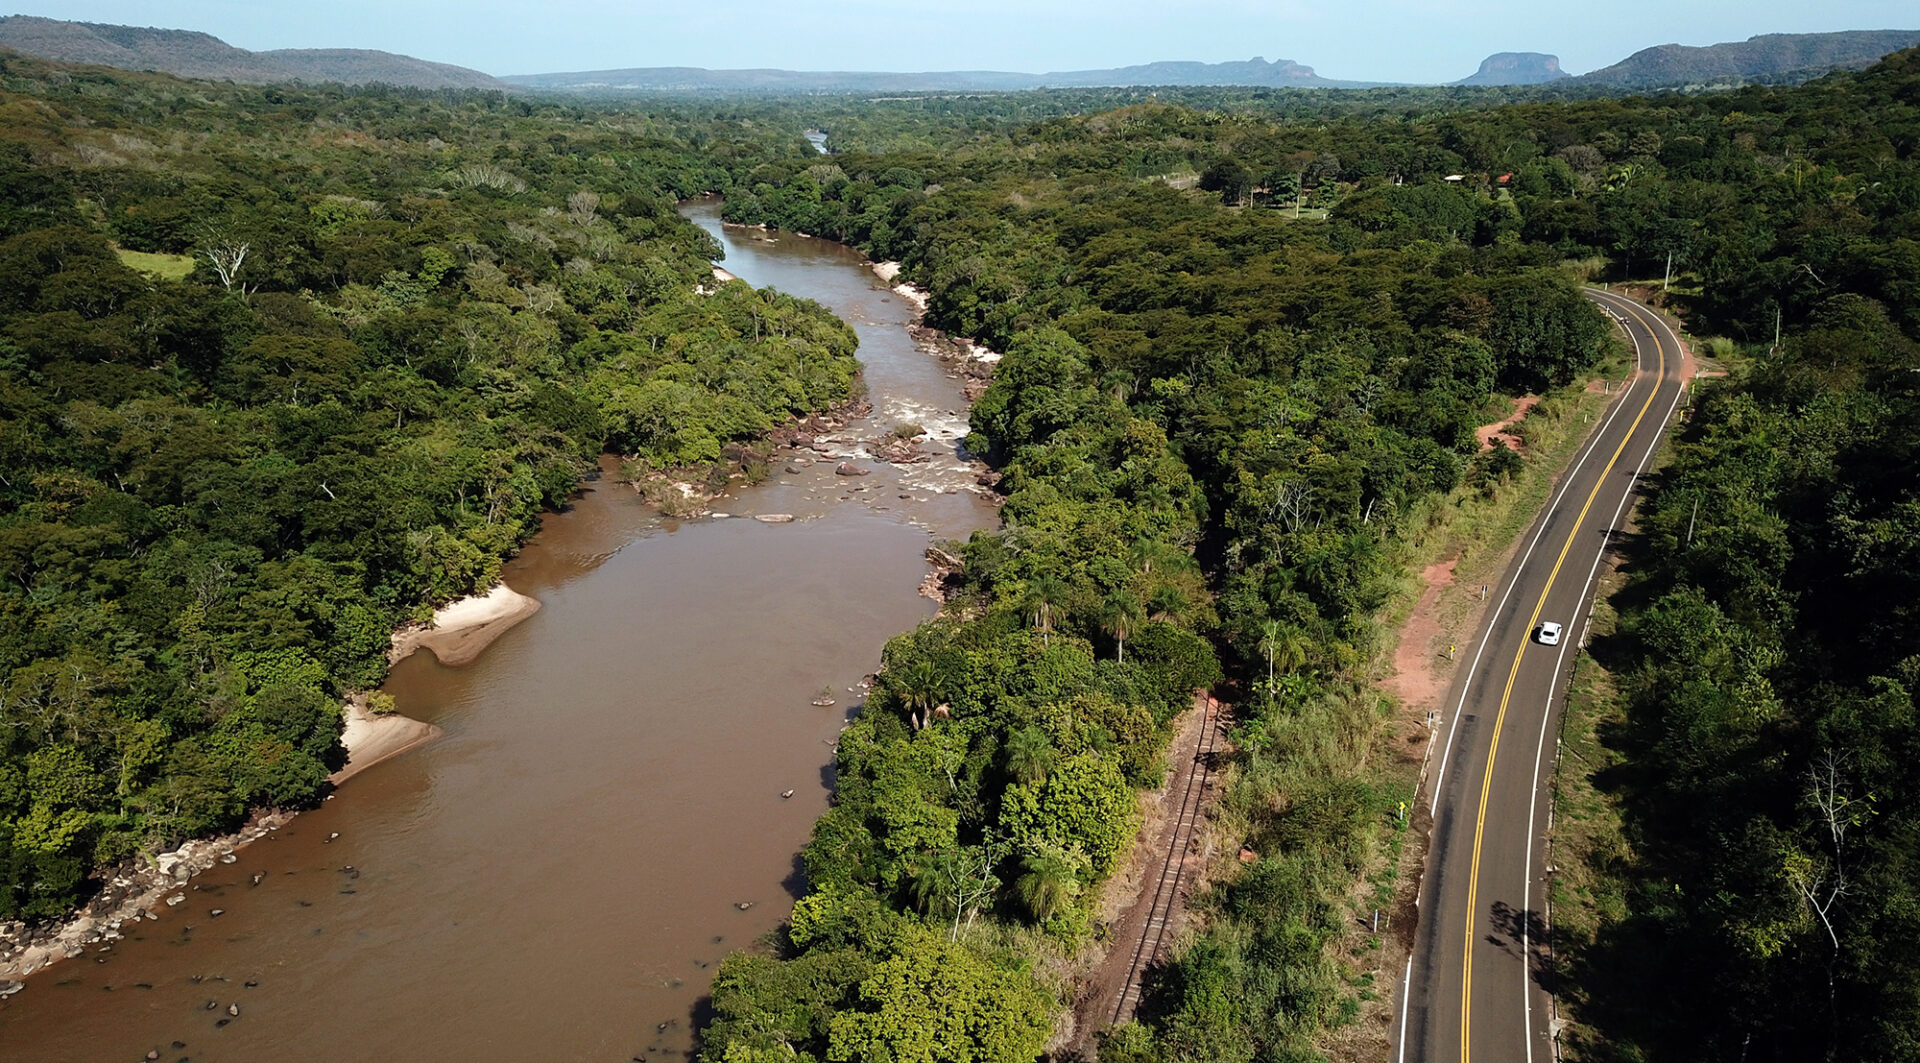 Estrada-Parque tem grande potencial turístico: asfalto corta a morraria, onde passam o Rio Aquidauana e a antiga ferrovia Noroeste do Brasil